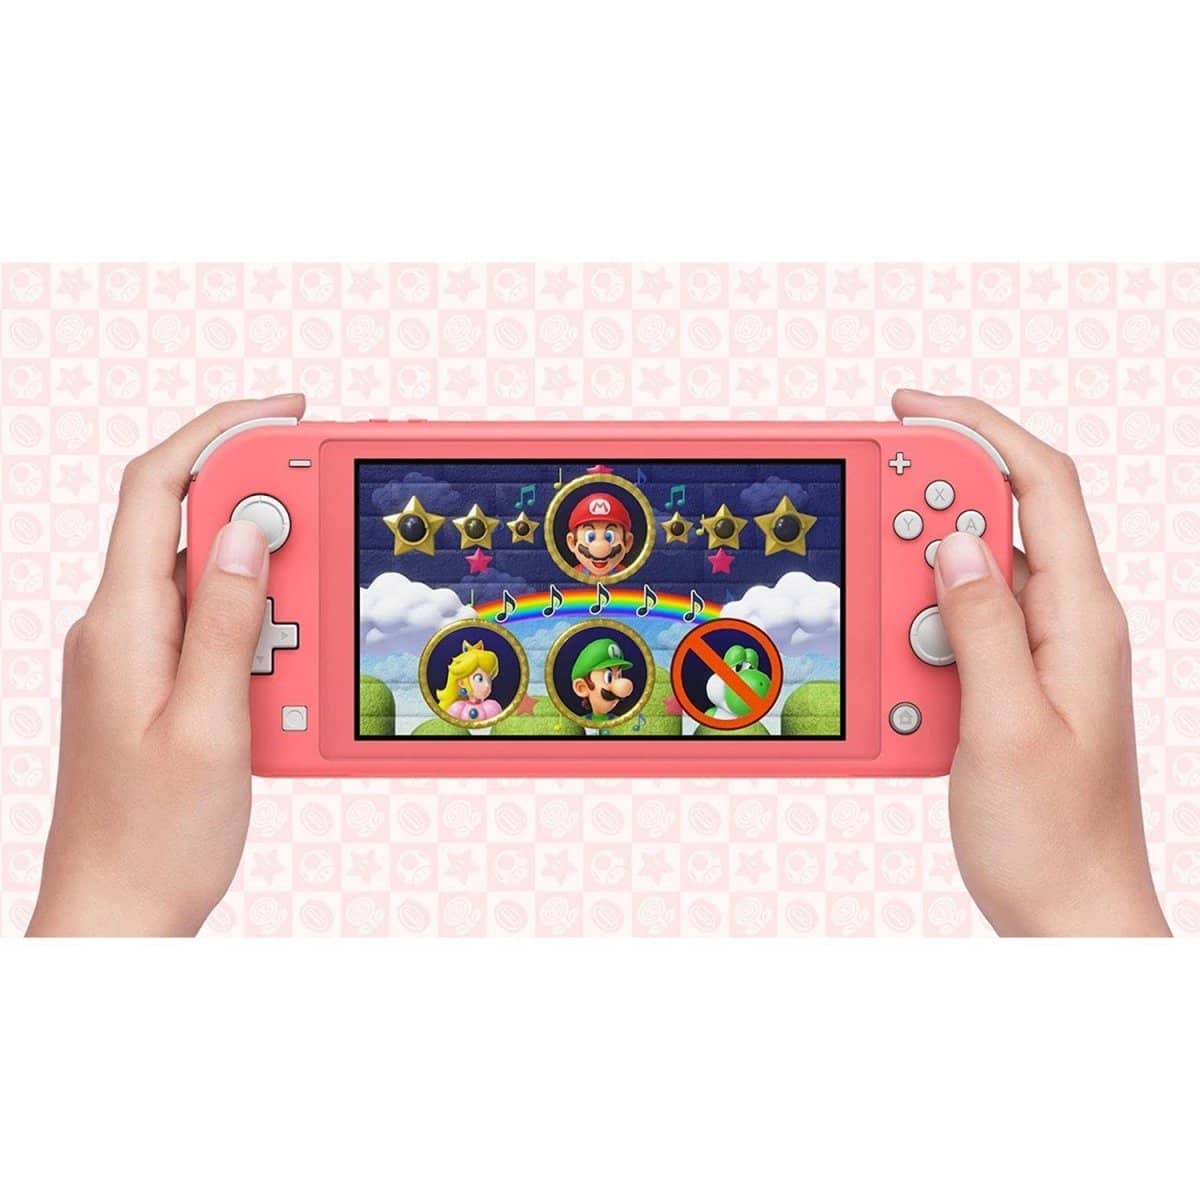 Nintendo Switch [Digital Code] Mario Party Superstars Standard - Toottoot SG